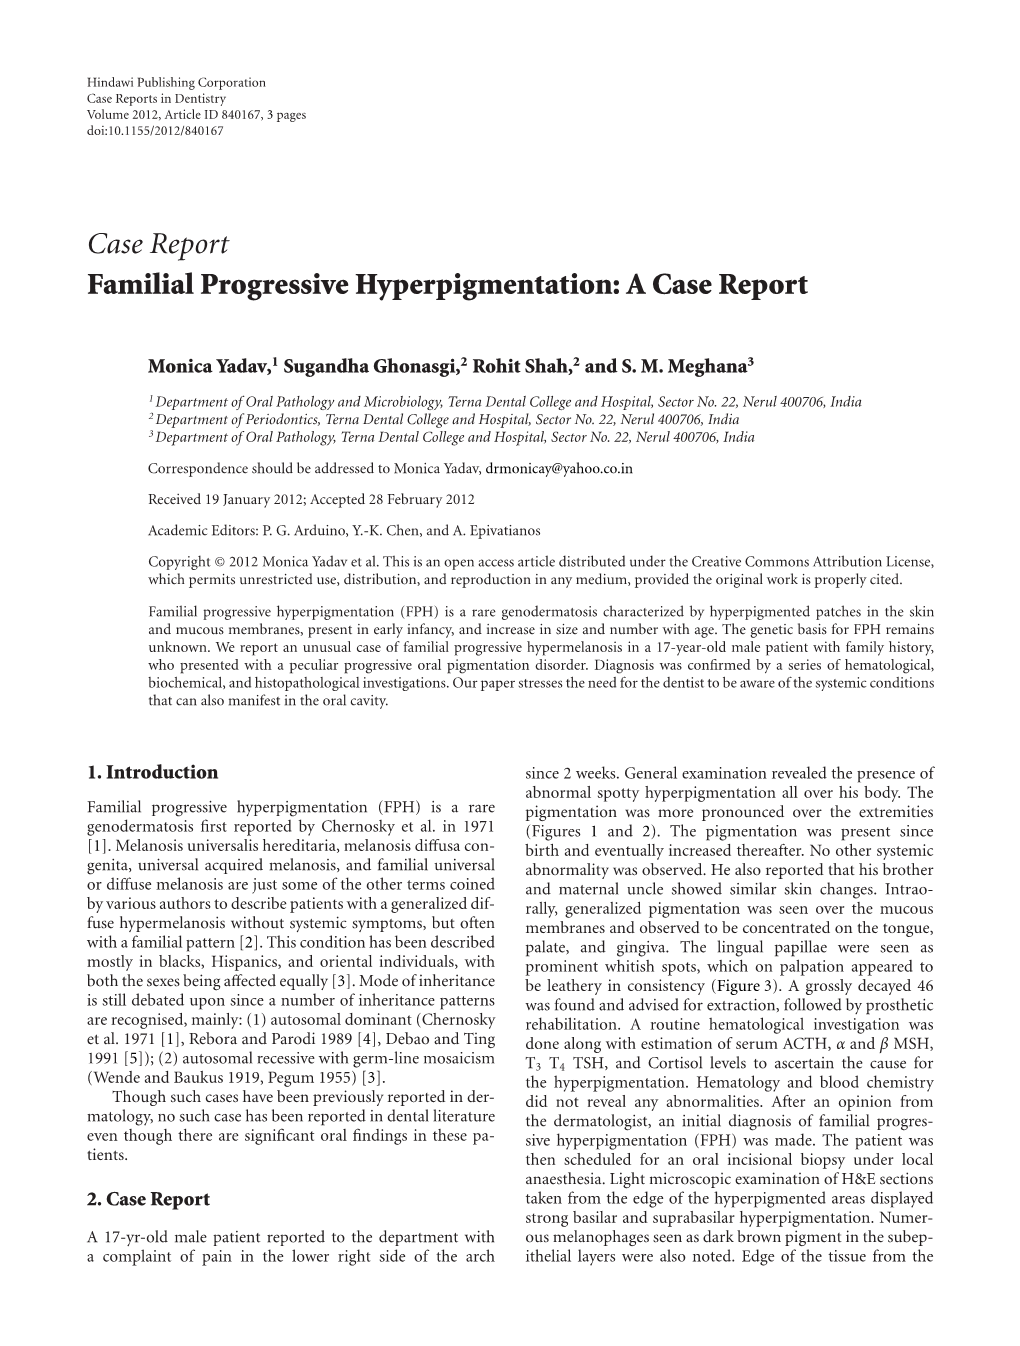 Familial Progressive Hyperpigmentation: a Case Report